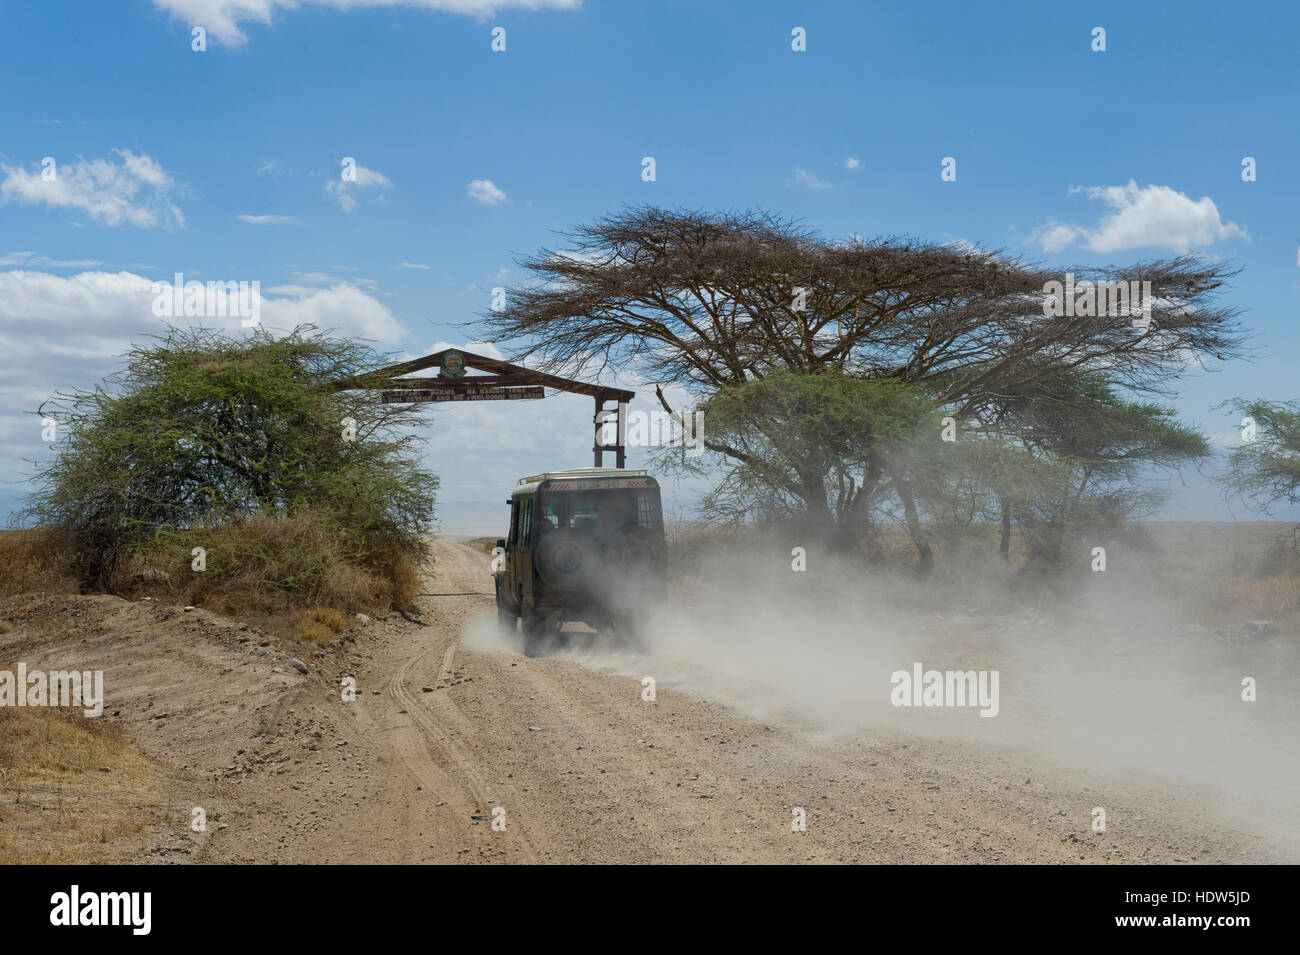 Jeep fahren auf staubigen Schotterstraße von Serengeti in Ngorongoro Conservation Area, Tansania Stockfoto